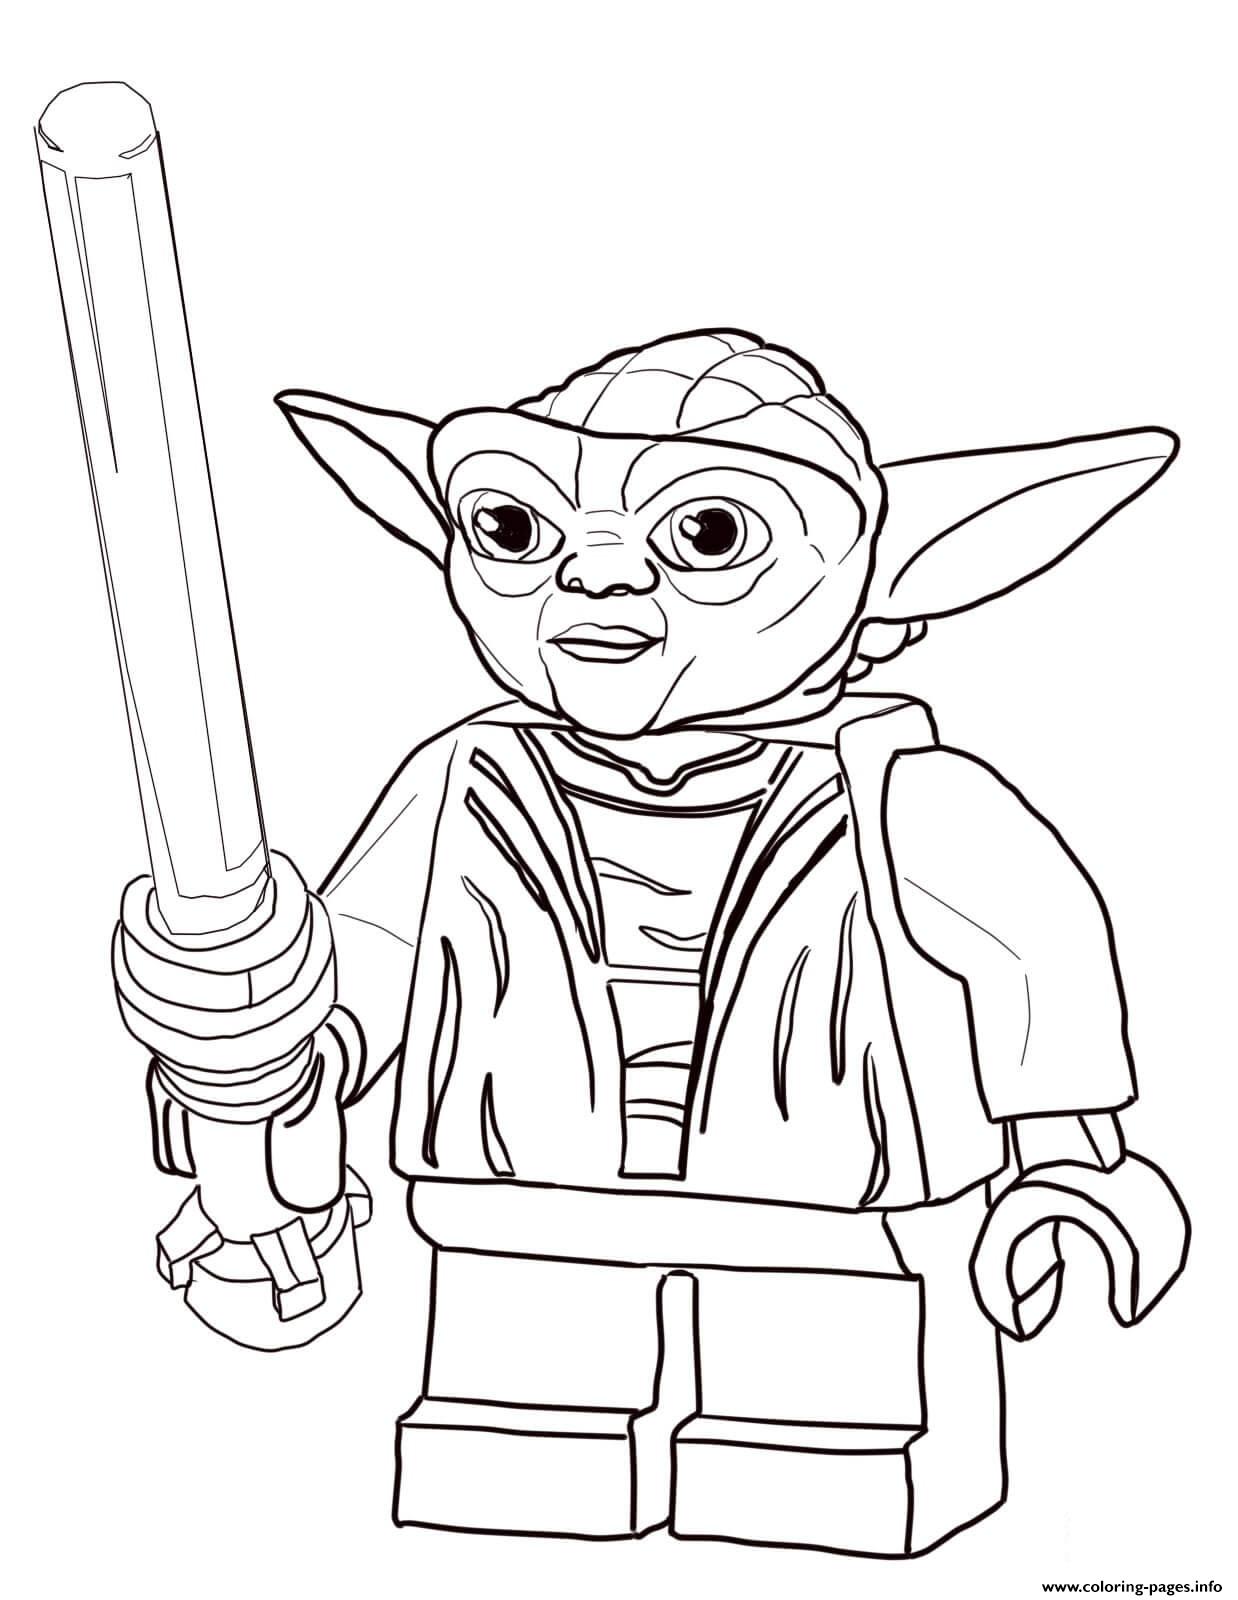 Lego Star Wars Master Yoda coloring